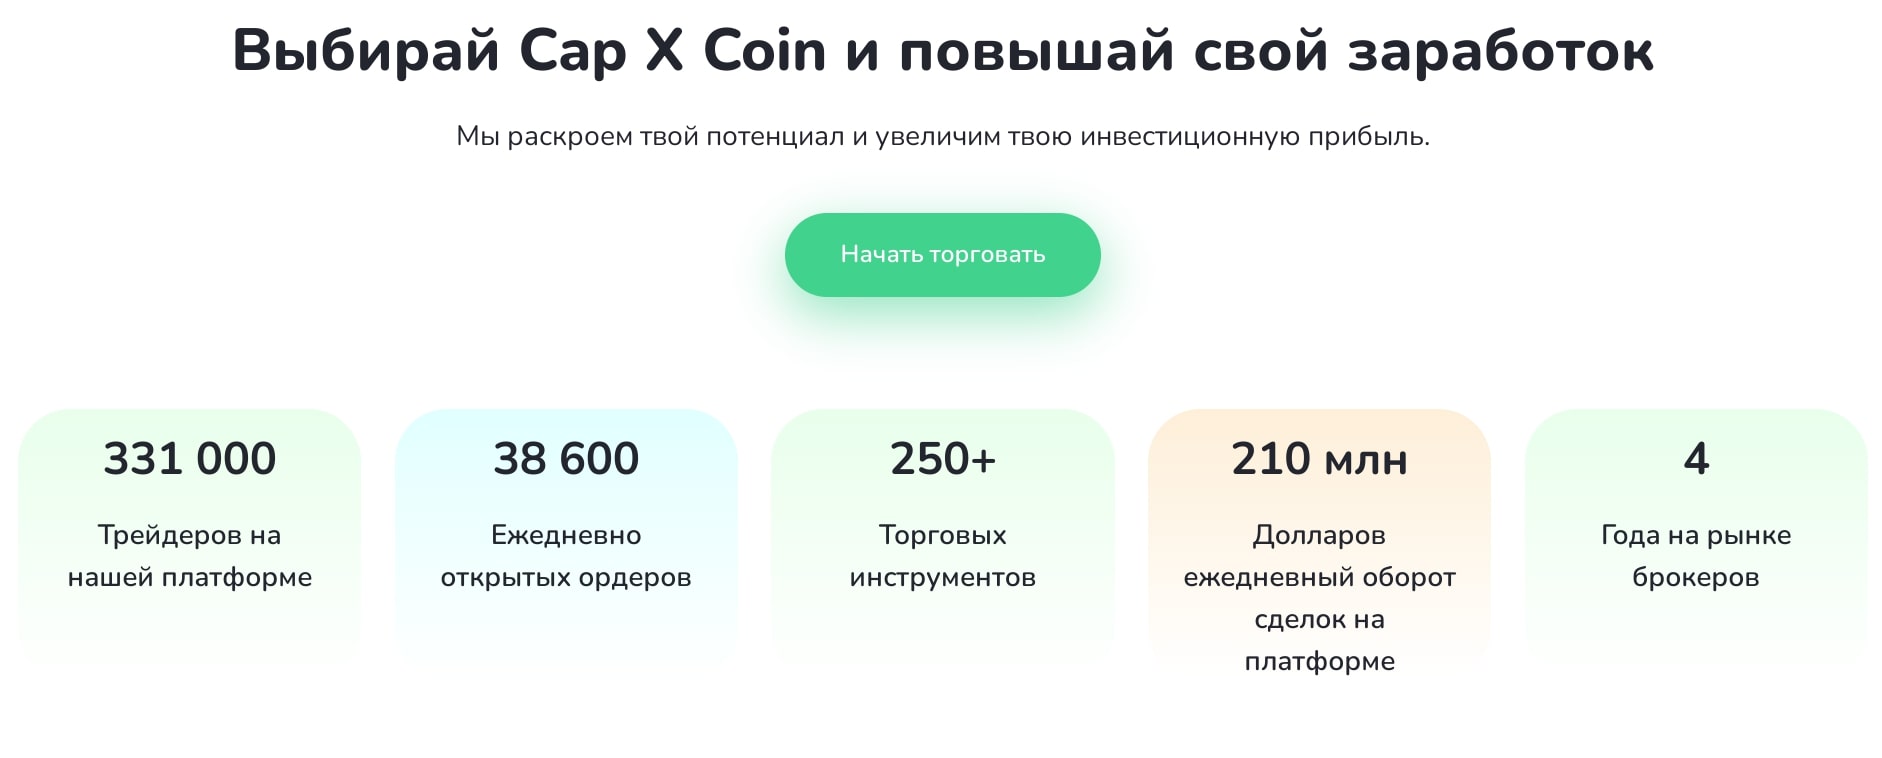 Цены Cap x Coin